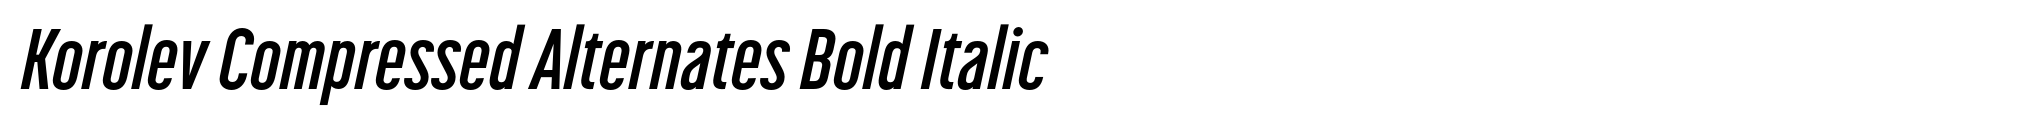 Korolev Compressed Alternates Bold Italic image